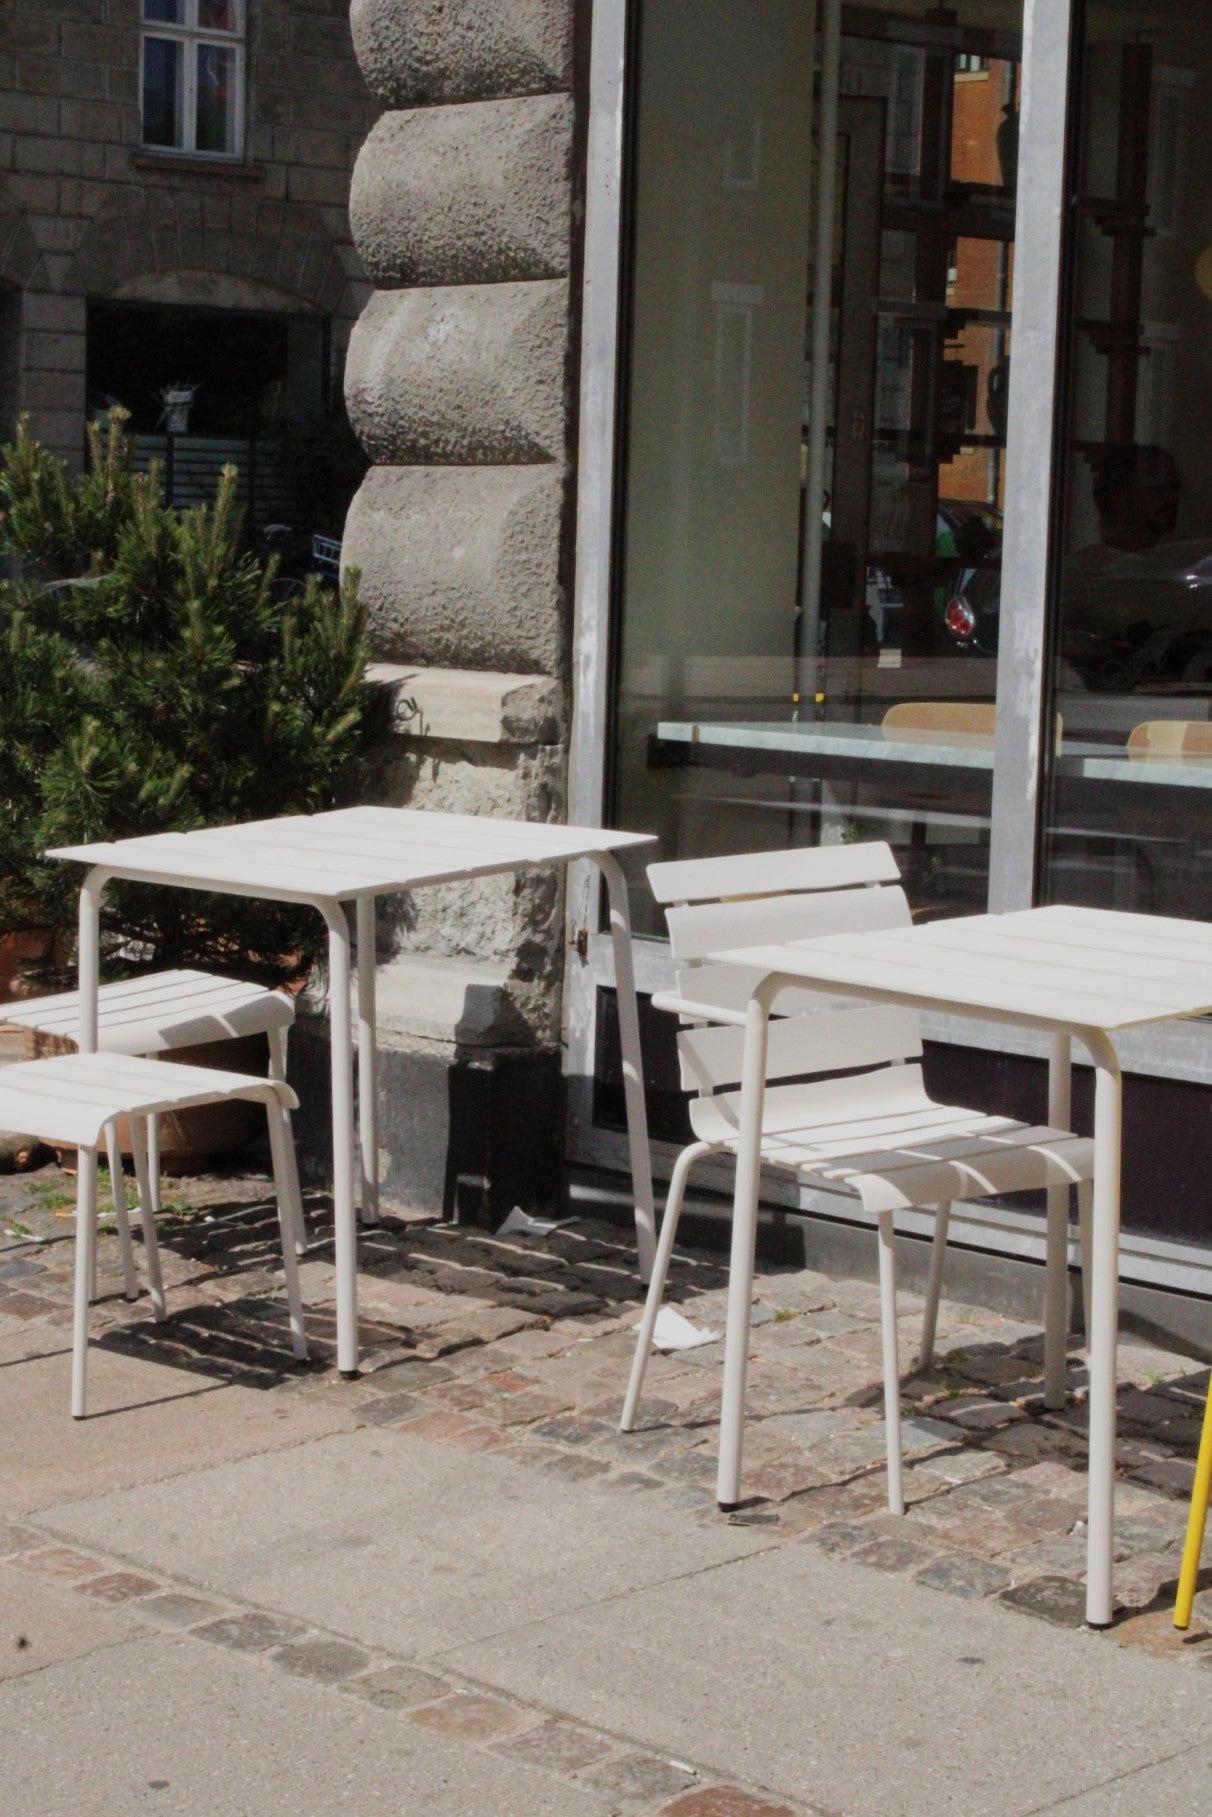 Maarten Baas - Aligned outdoor dining table - Valerie Objects